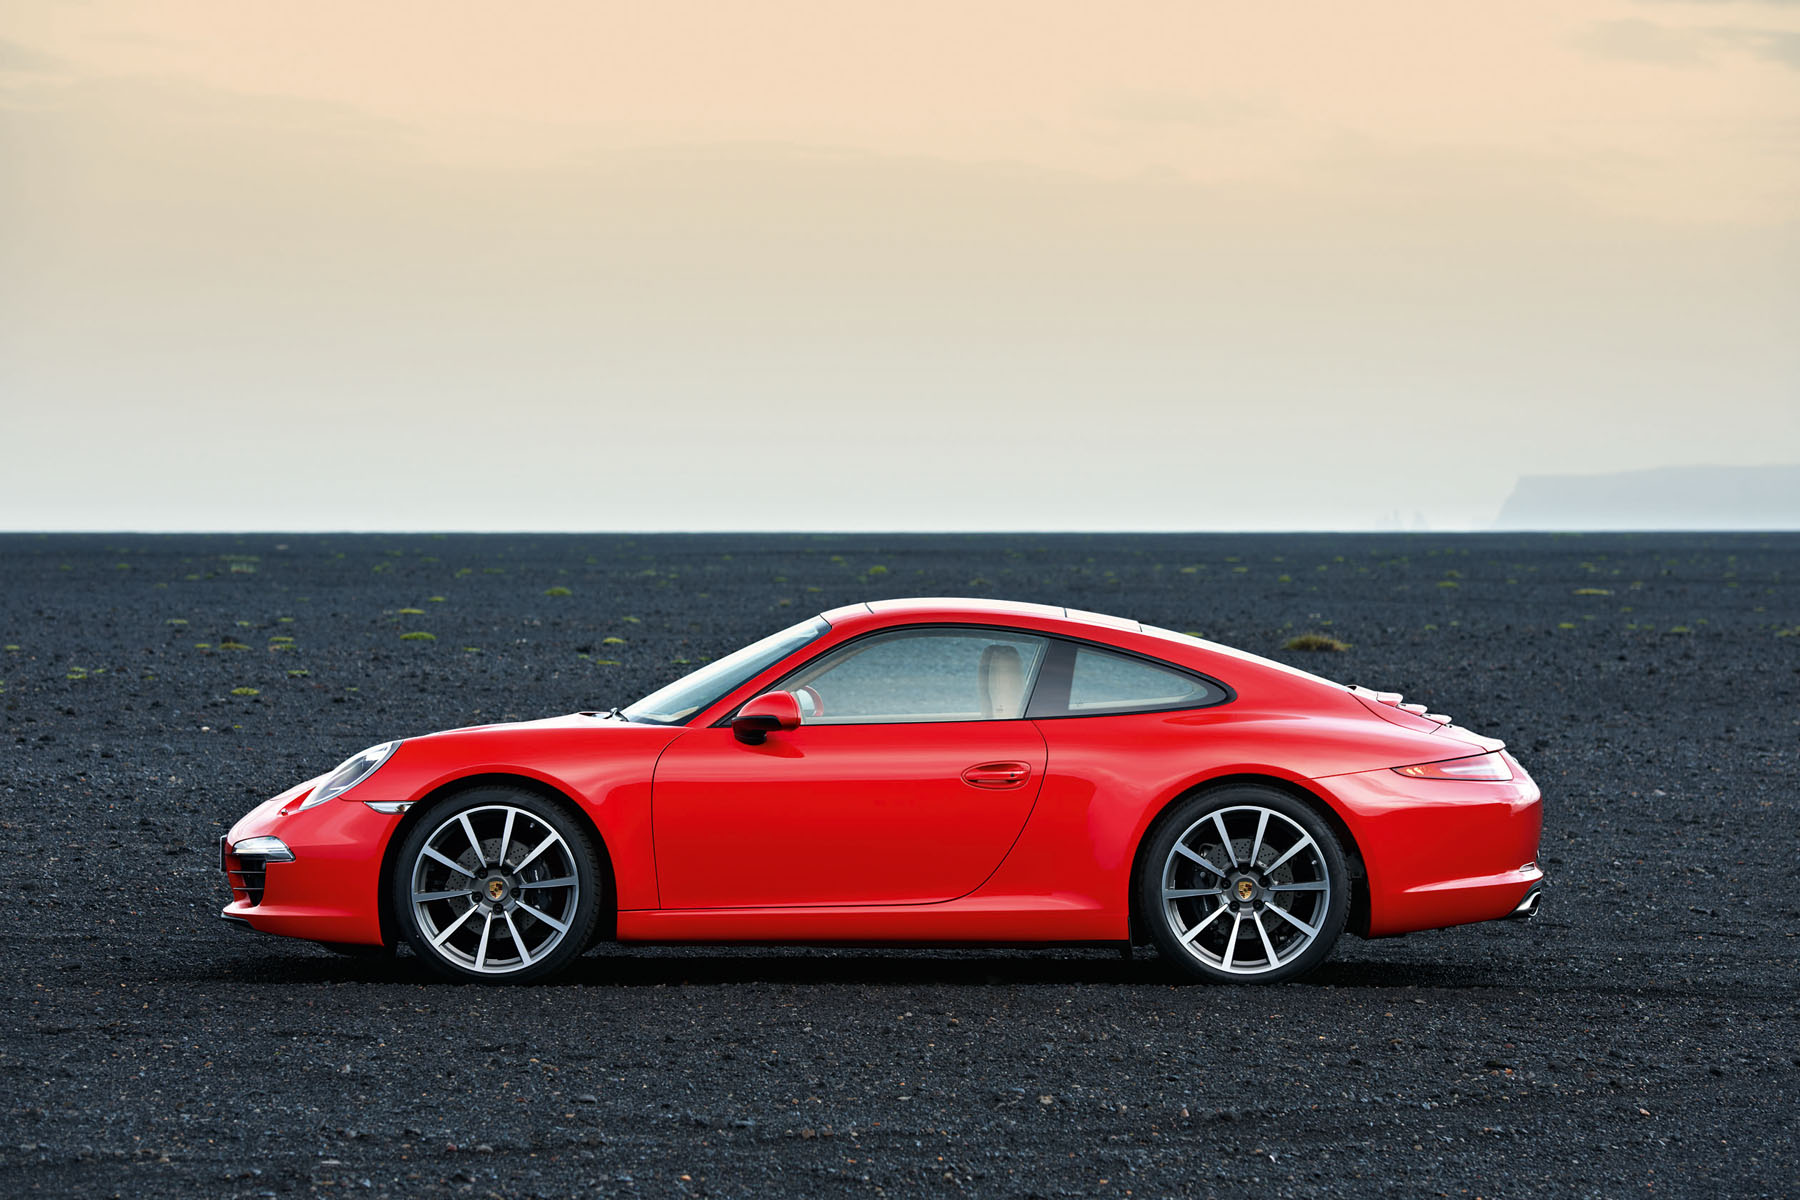 Red Porsche Backgrounds, Compatible - PC, Mobile, Gadgets| 1800x1200 px